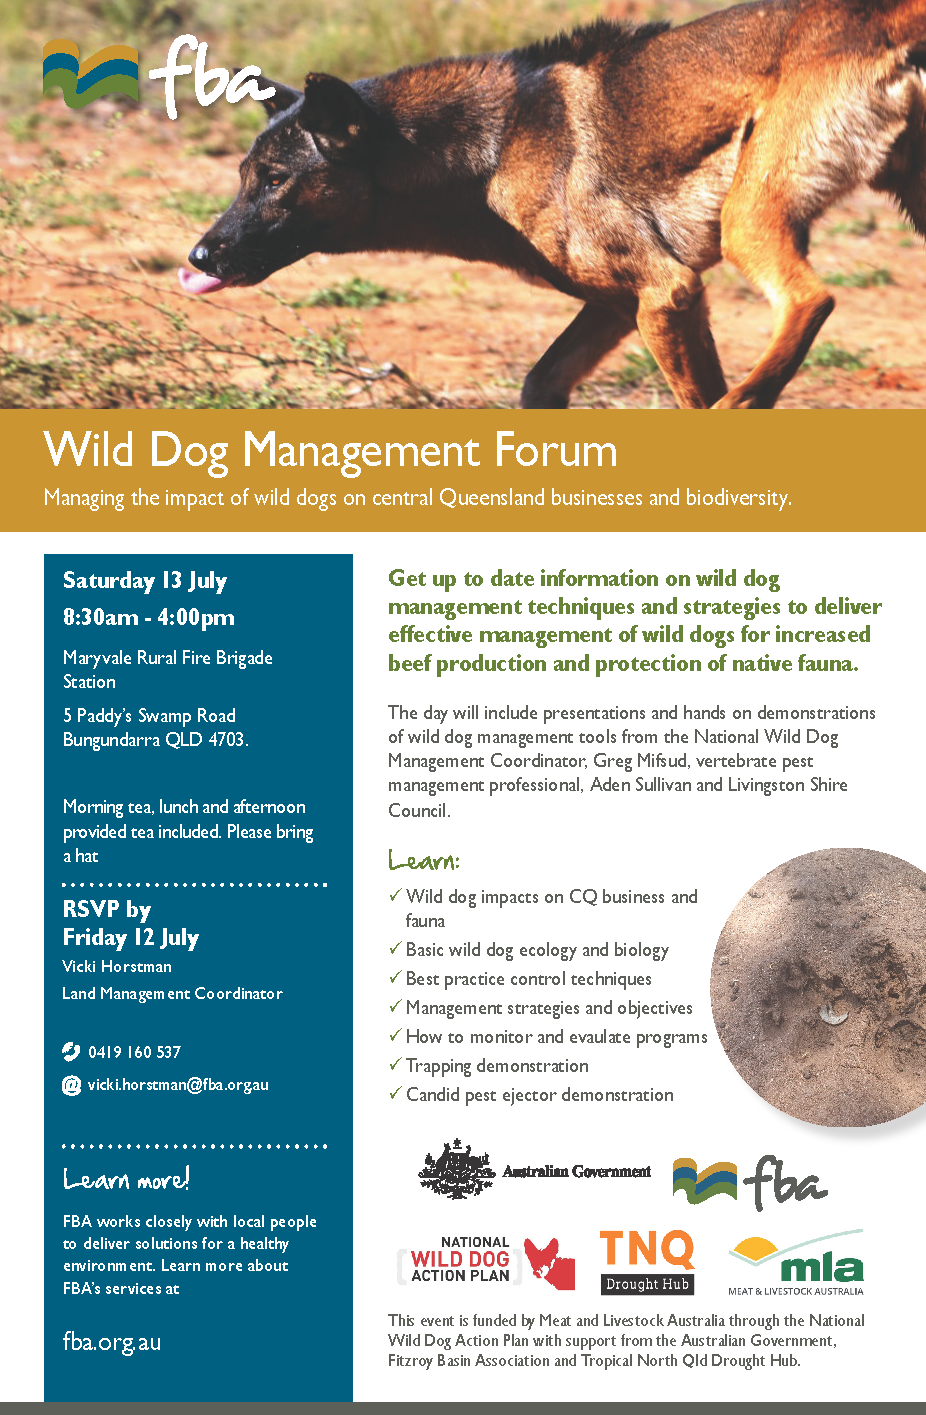 Wild dog management forum bungandarra